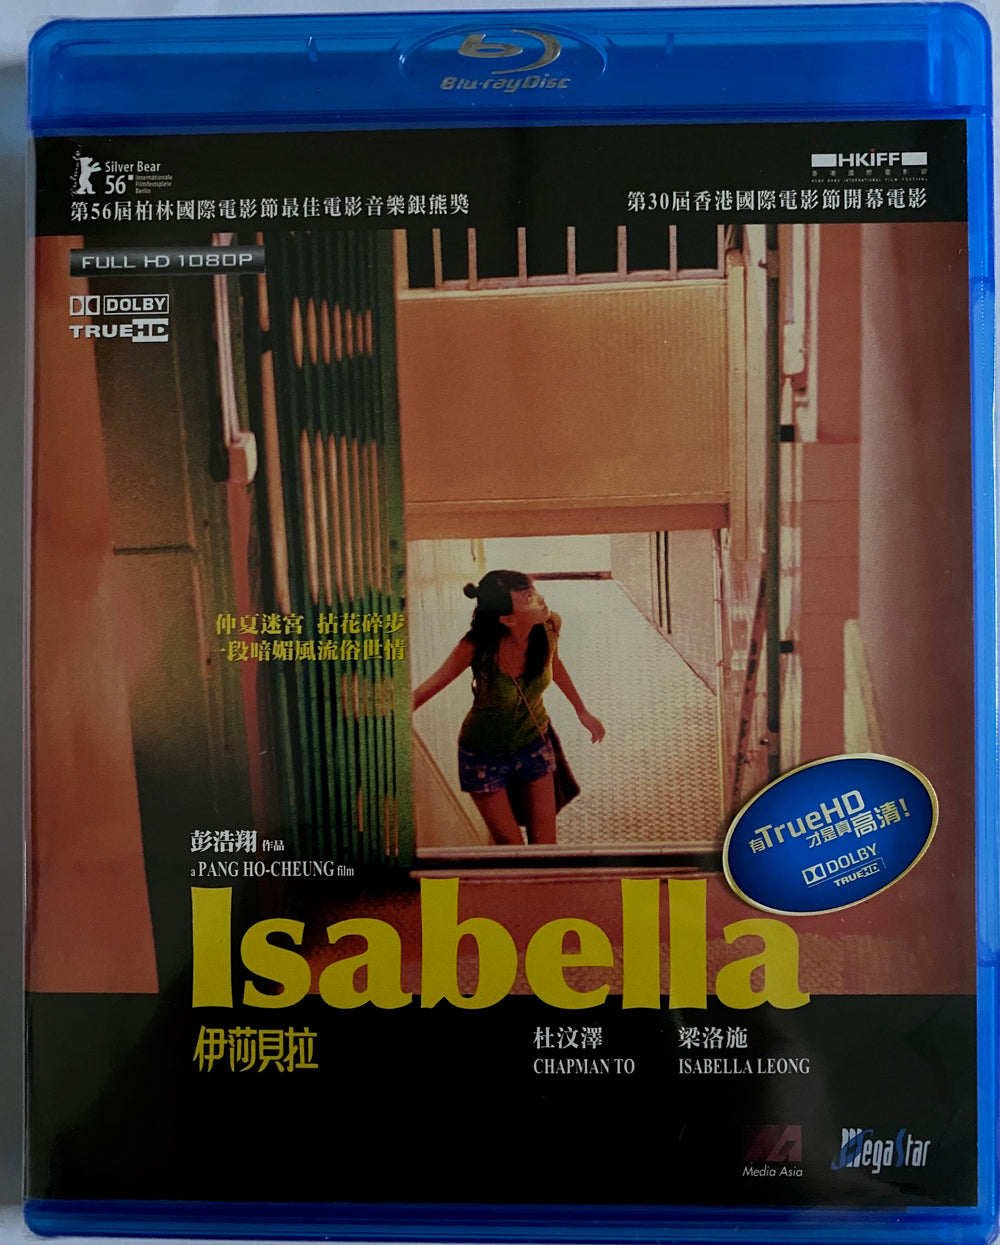 Isabella 伊莎貝拉 2006 (HK Movie) BLU-RAY with English Sub (Region Free)